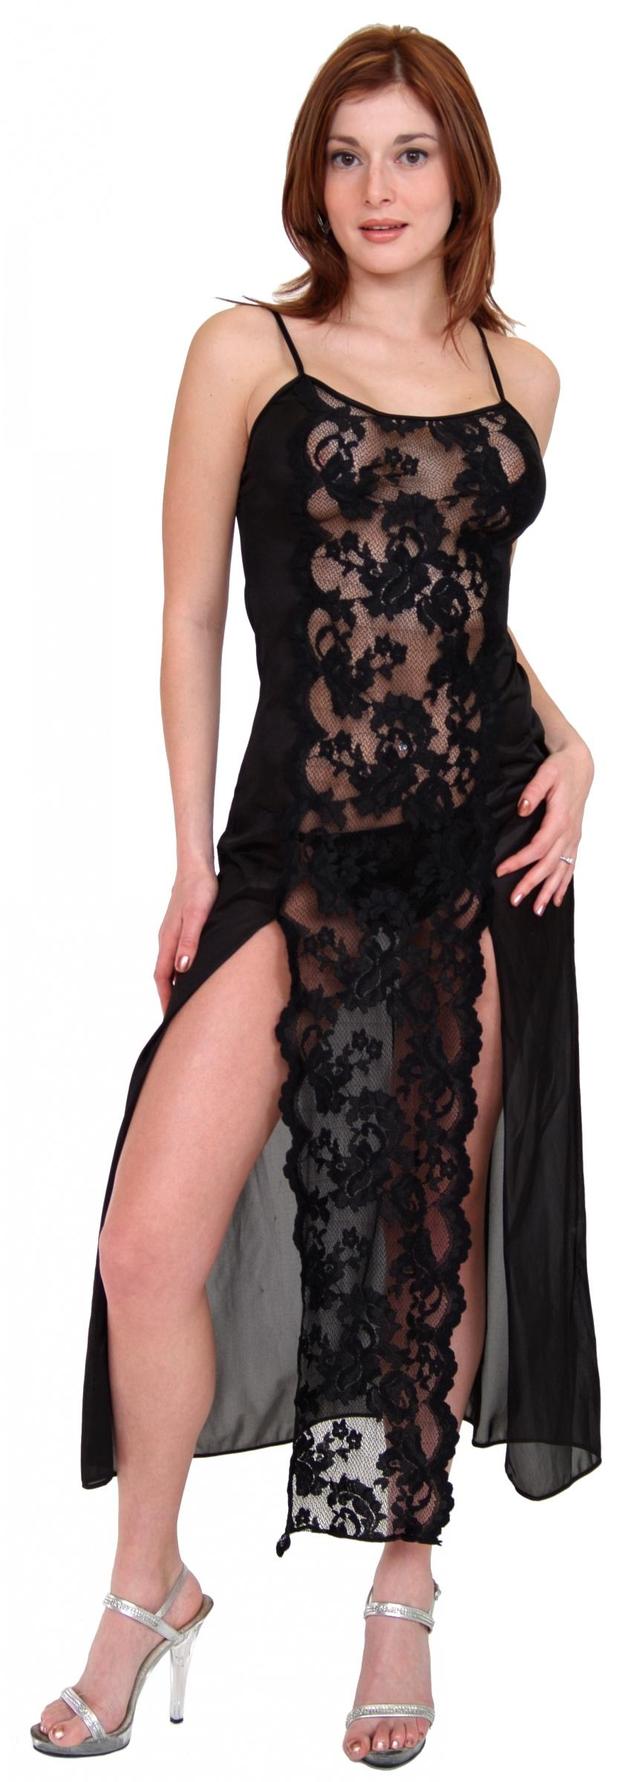 erotic nylon pics size sexy erotic lingerie lace person triangle splus nightgown ladystrange wishlists